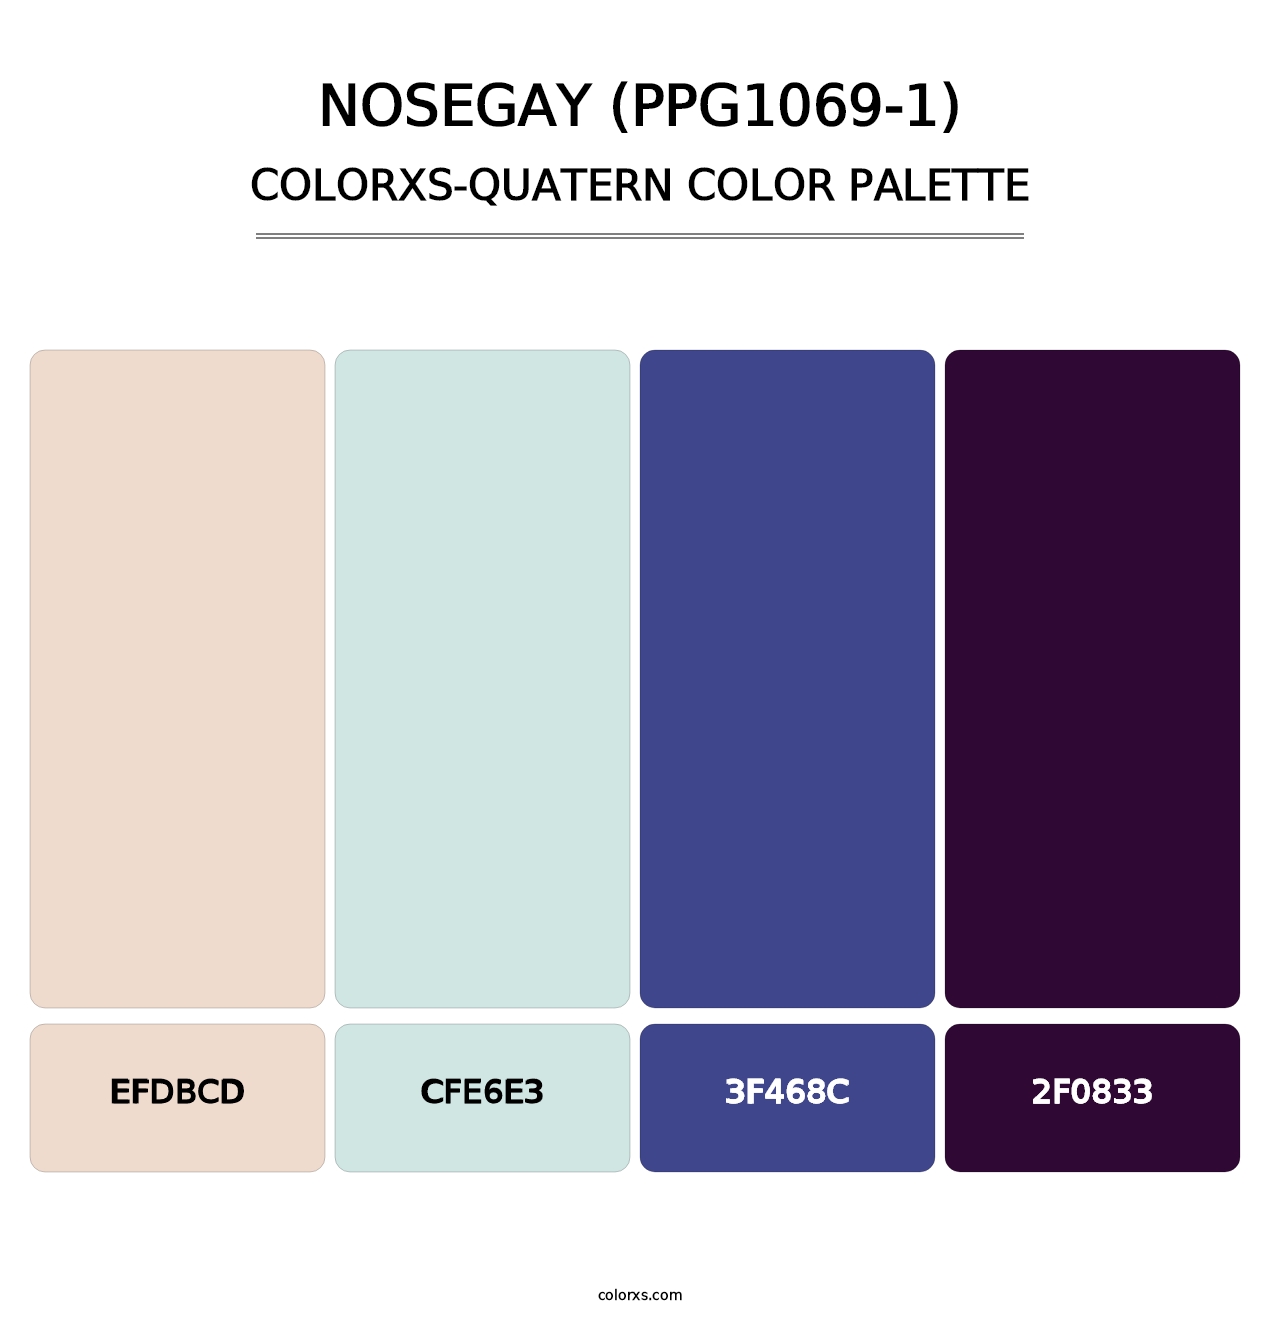 Nosegay (PPG1069-1) - Colorxs Quatern Palette